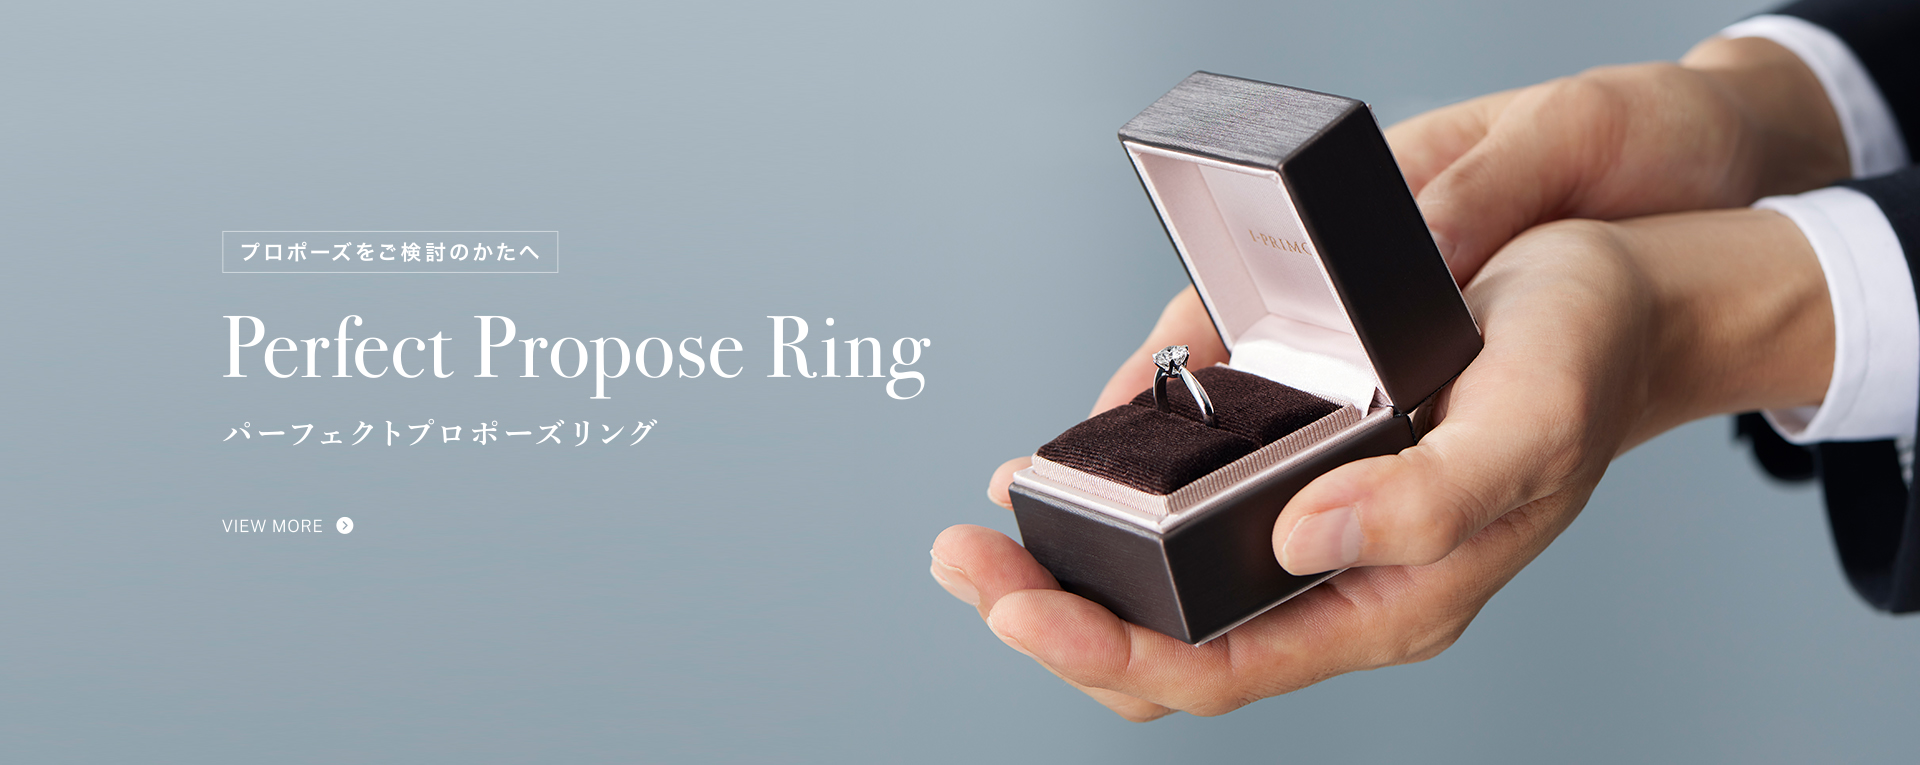 Perfecrt Propose Ring